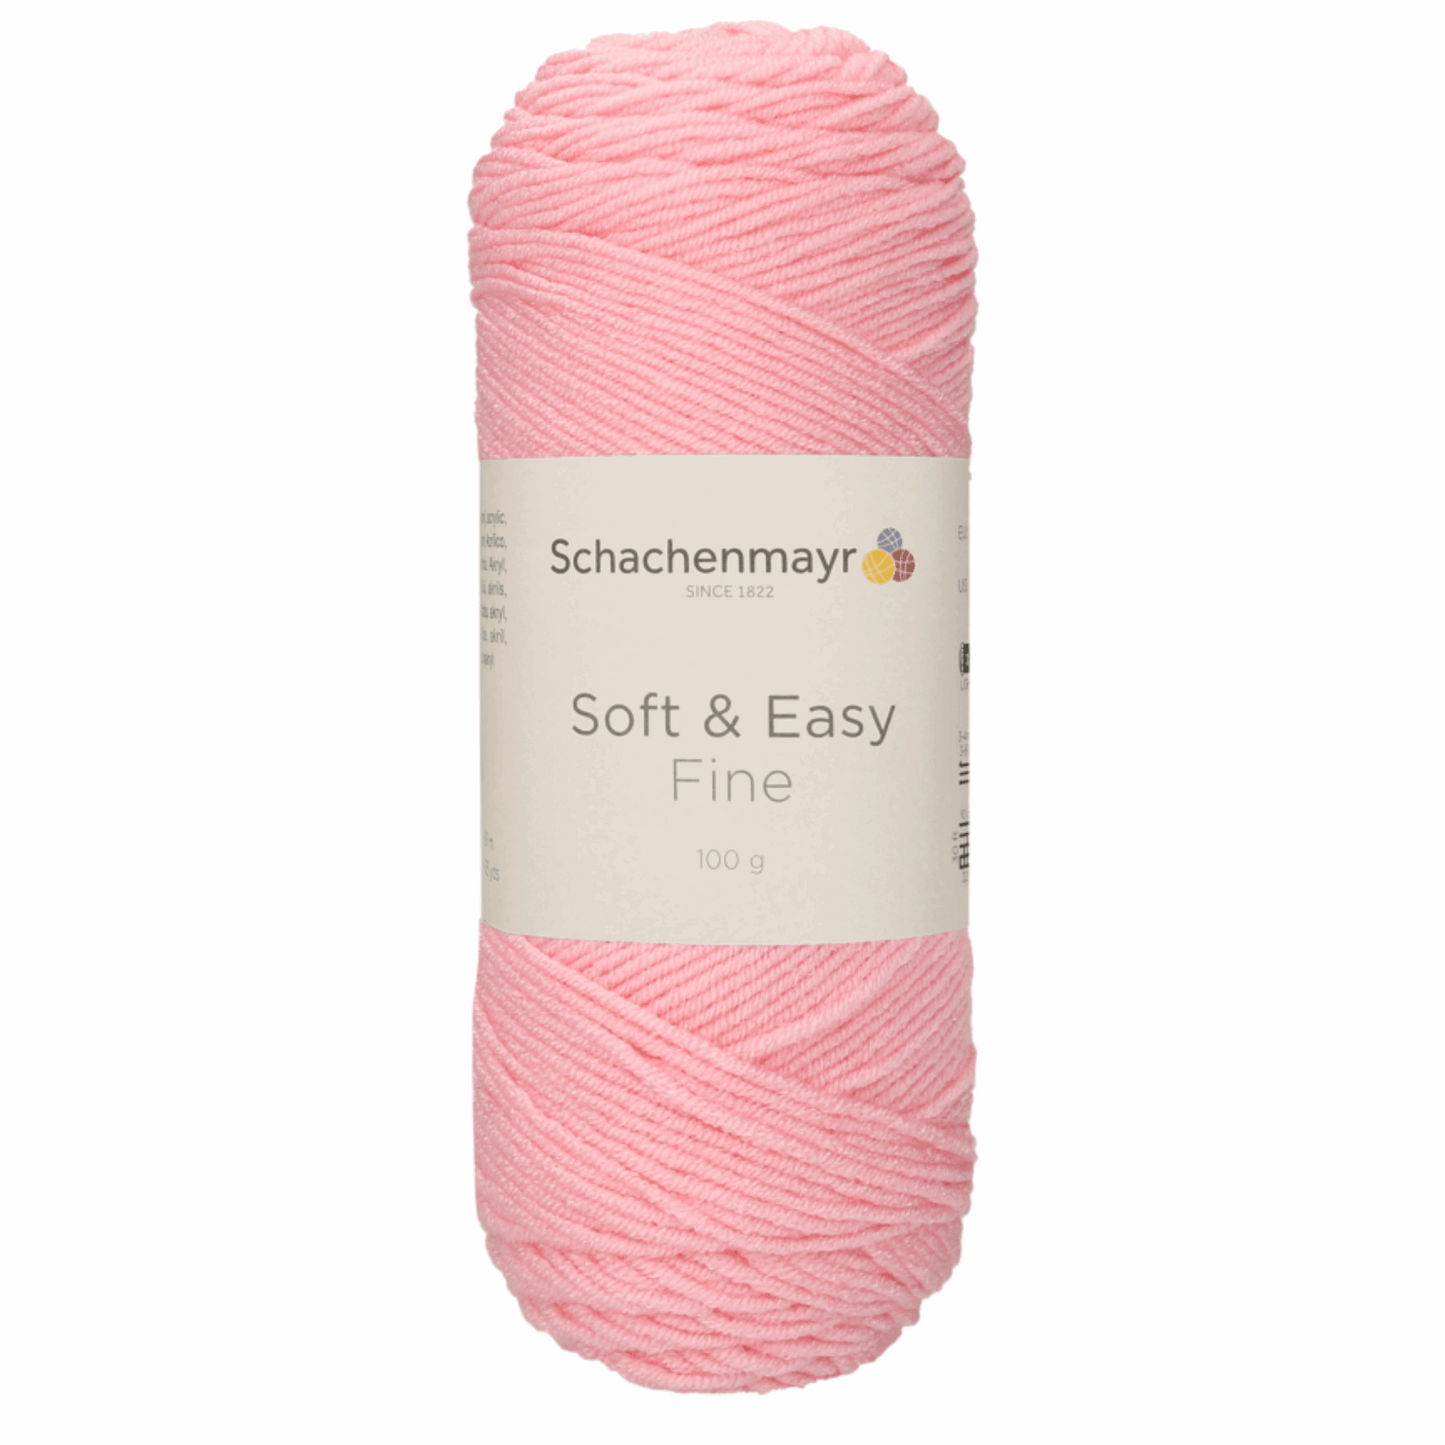 Schachenmayr Soft & Easy Fine 100g, 90402, Farbe Rosa 35